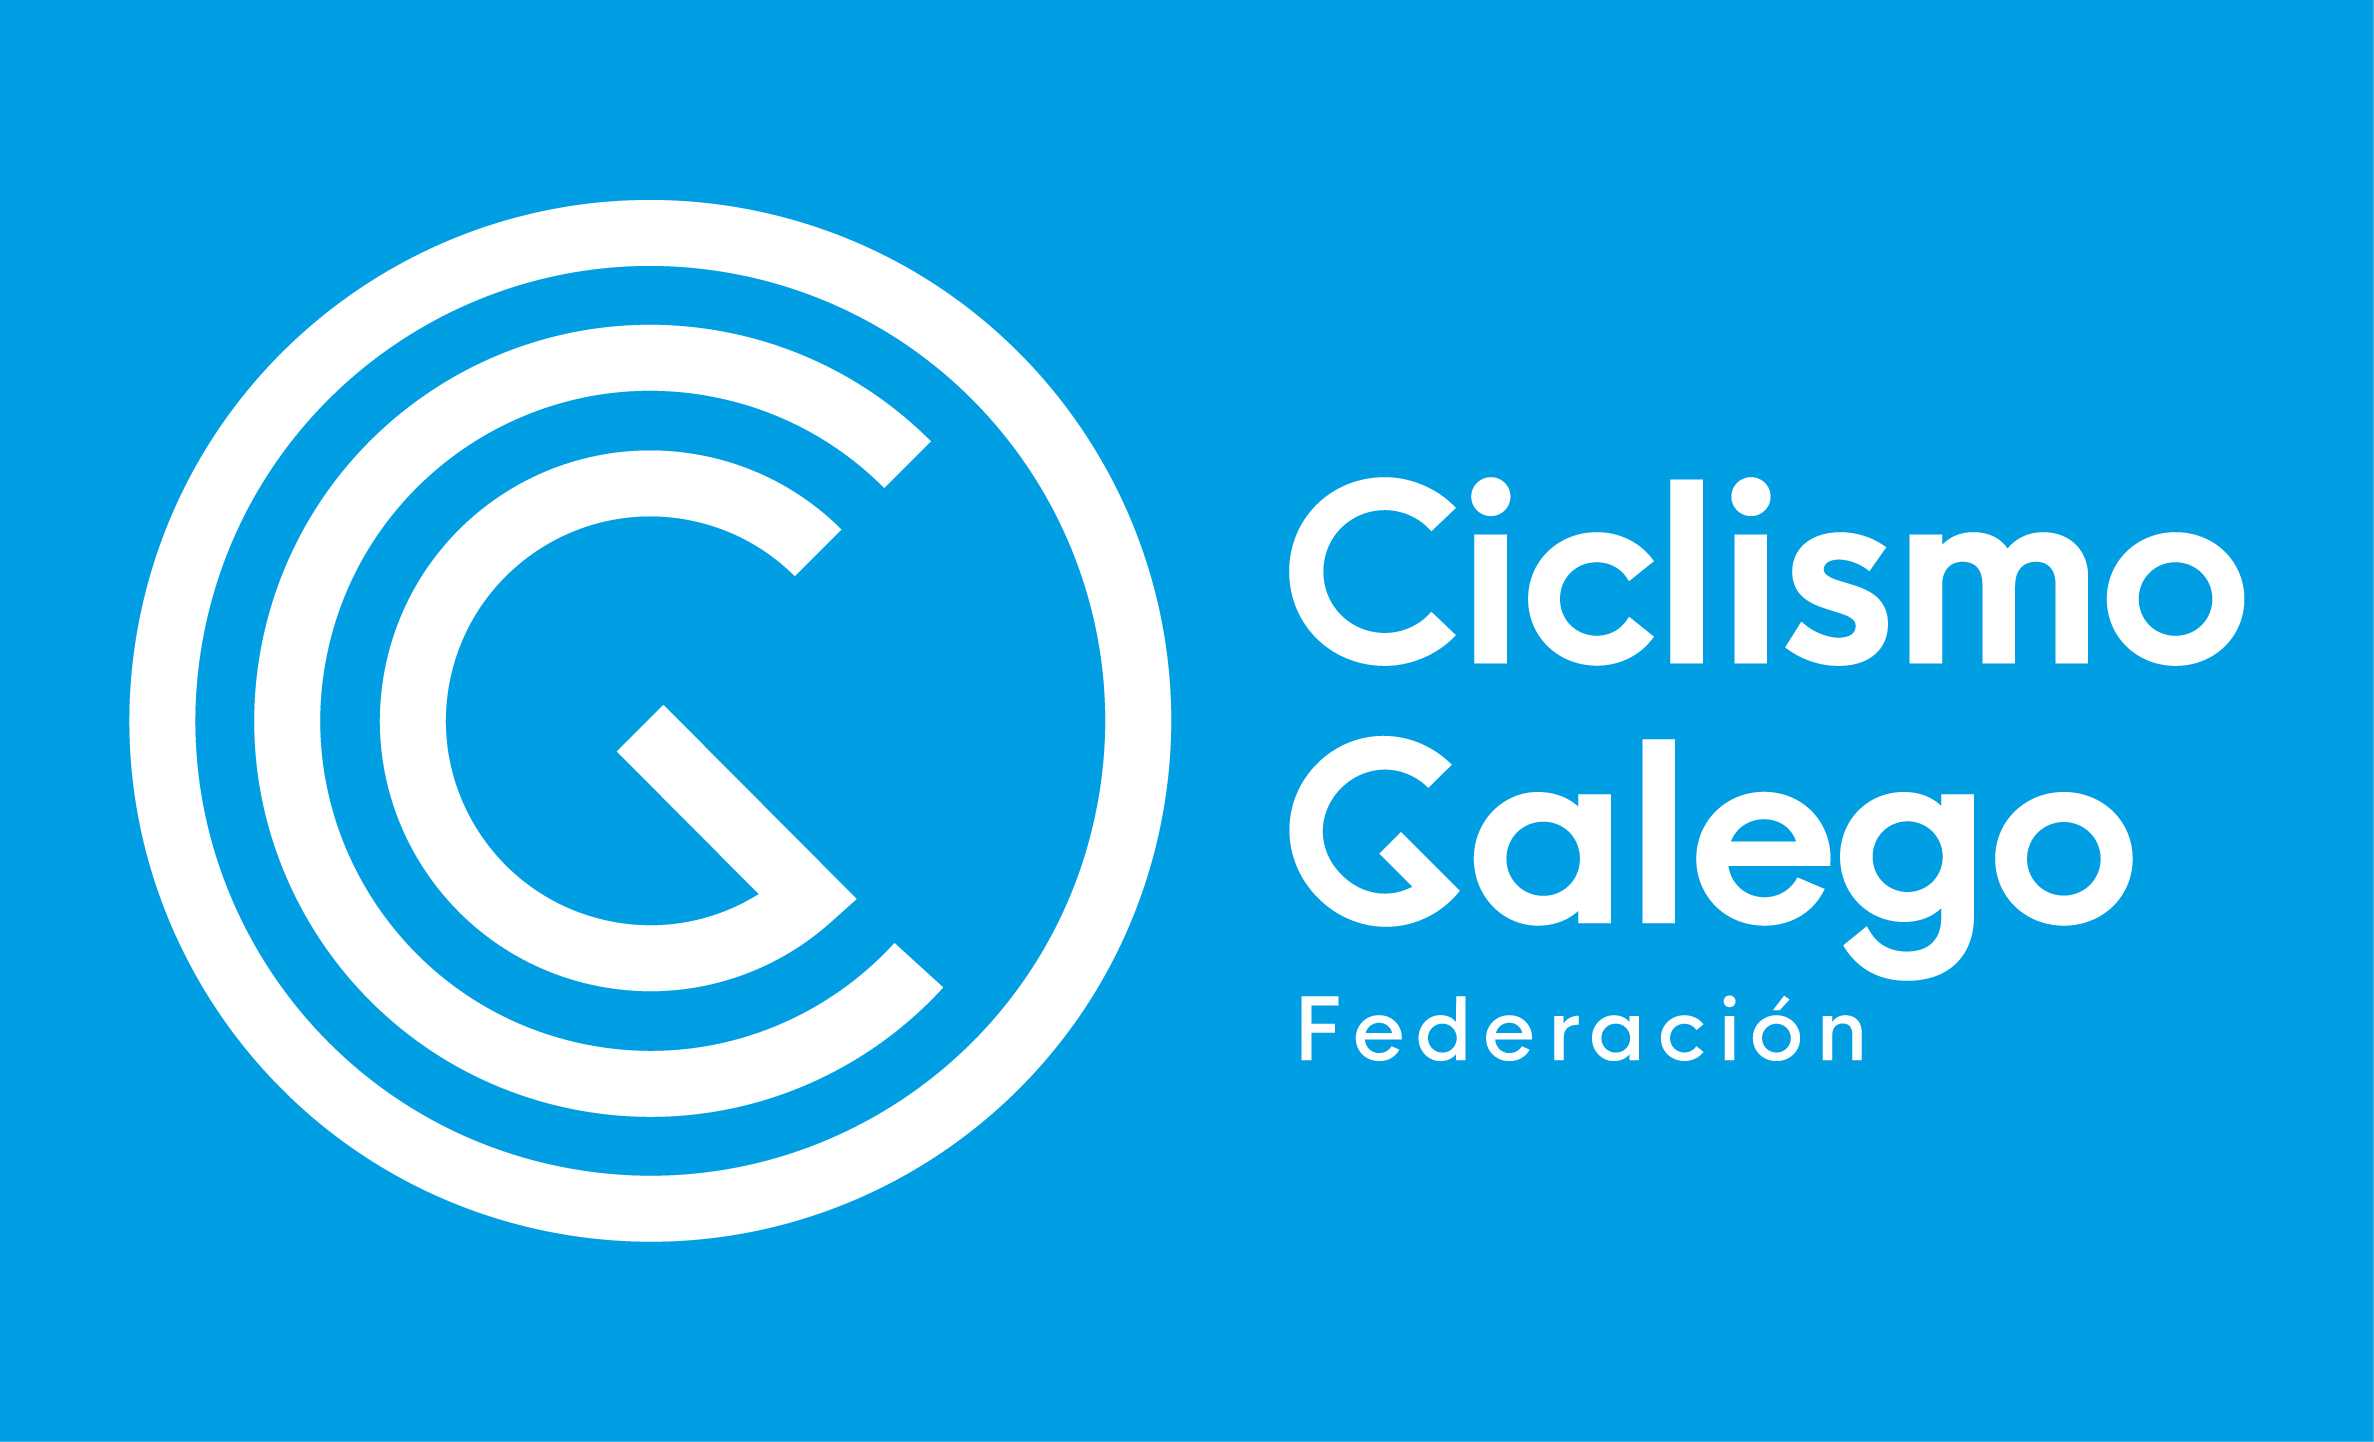 Federación Galega Ciclismo